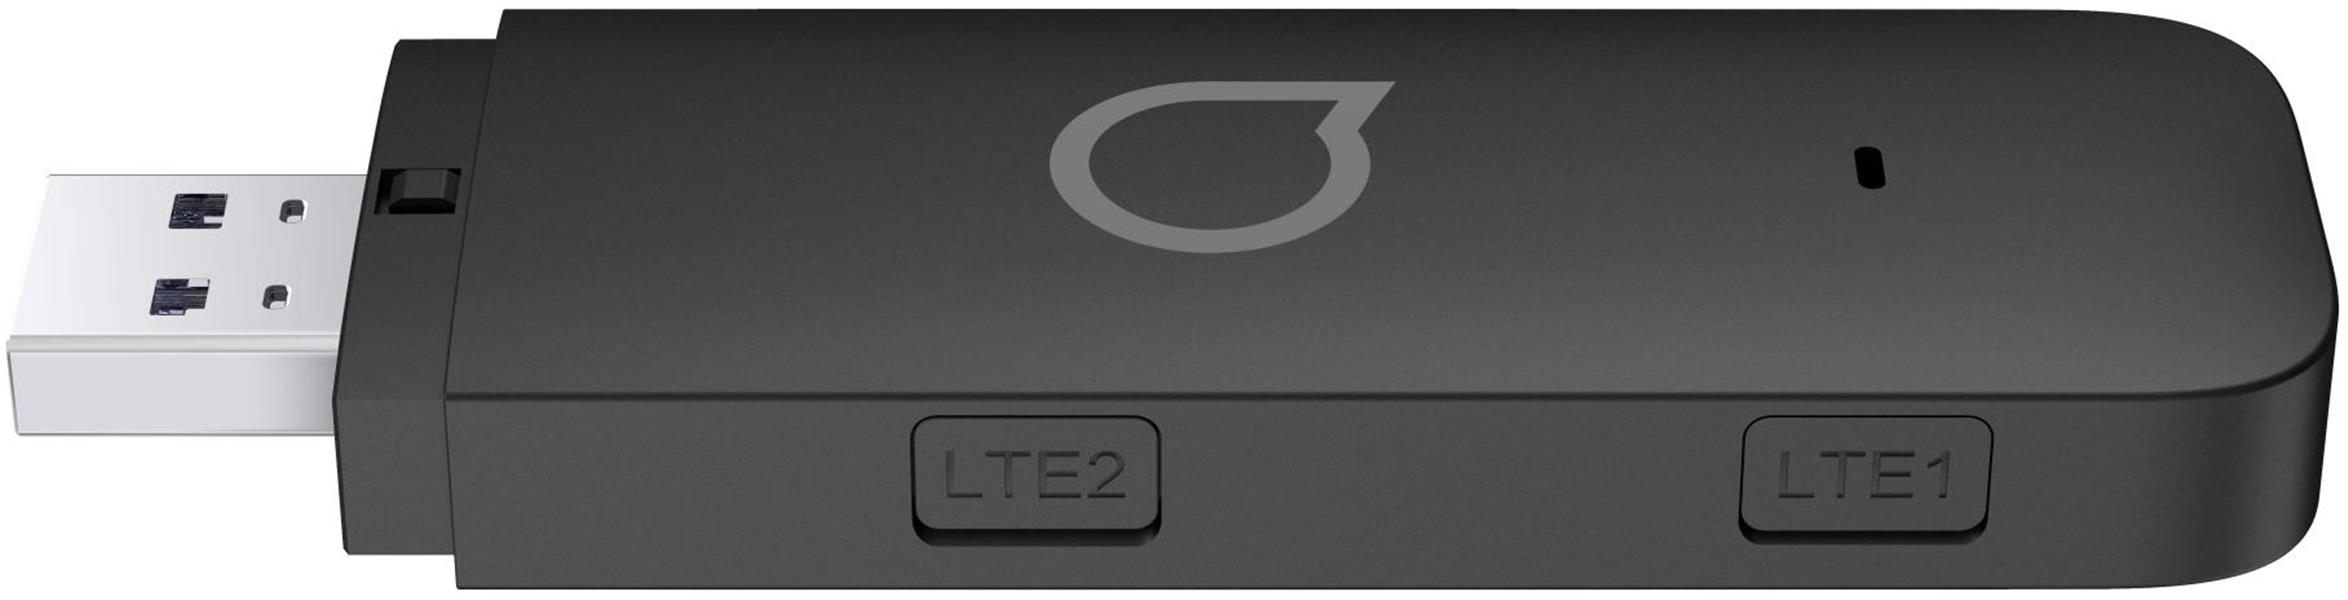 IK41 Alcatel LinkKey 4G USB Dongle Black